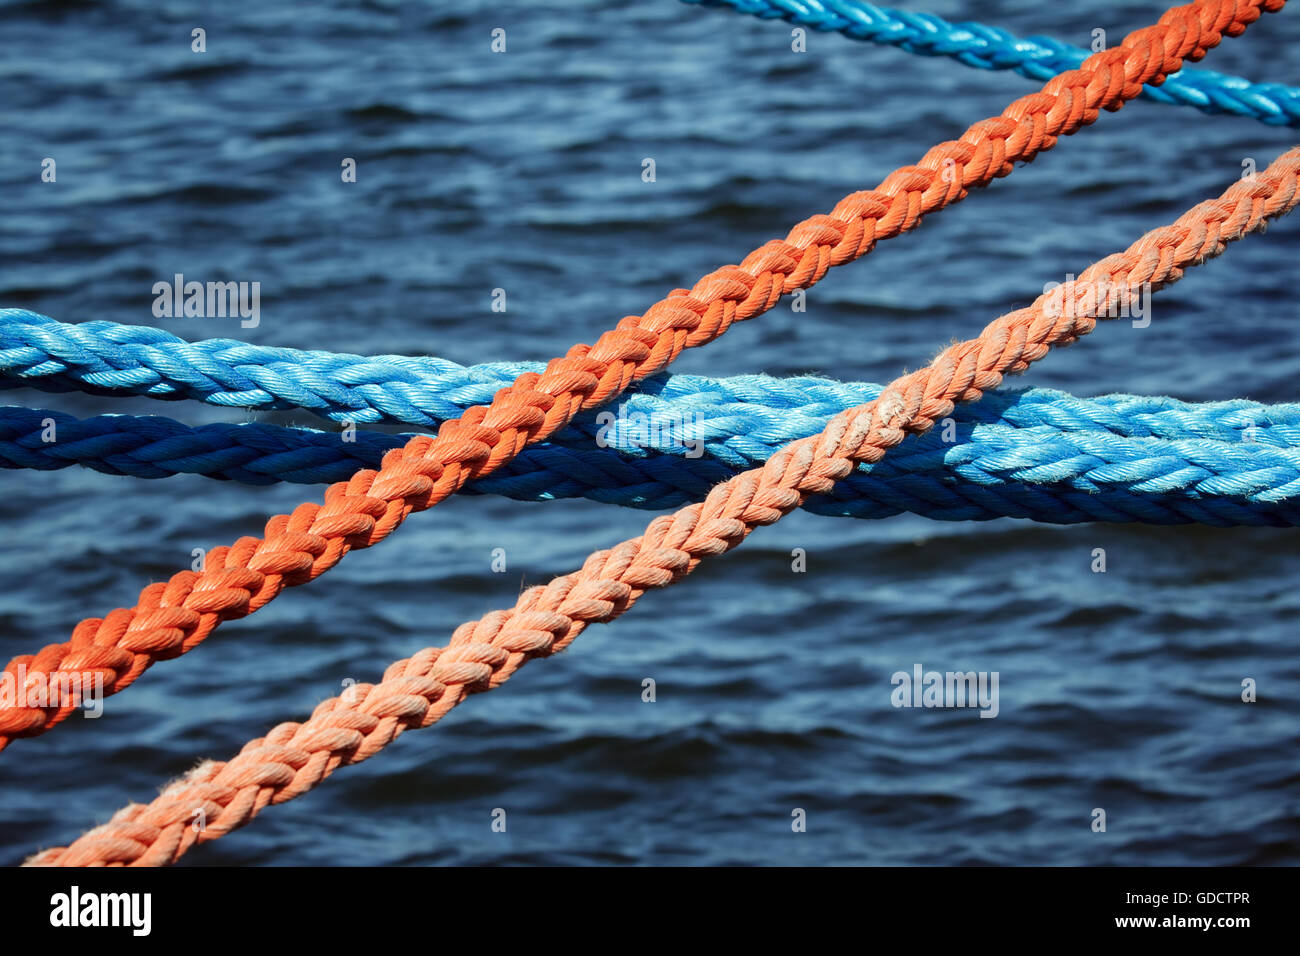 https://c8.alamy.com/comp/GDCTPR/ship-mooring-rope-GDCTPR.jpg